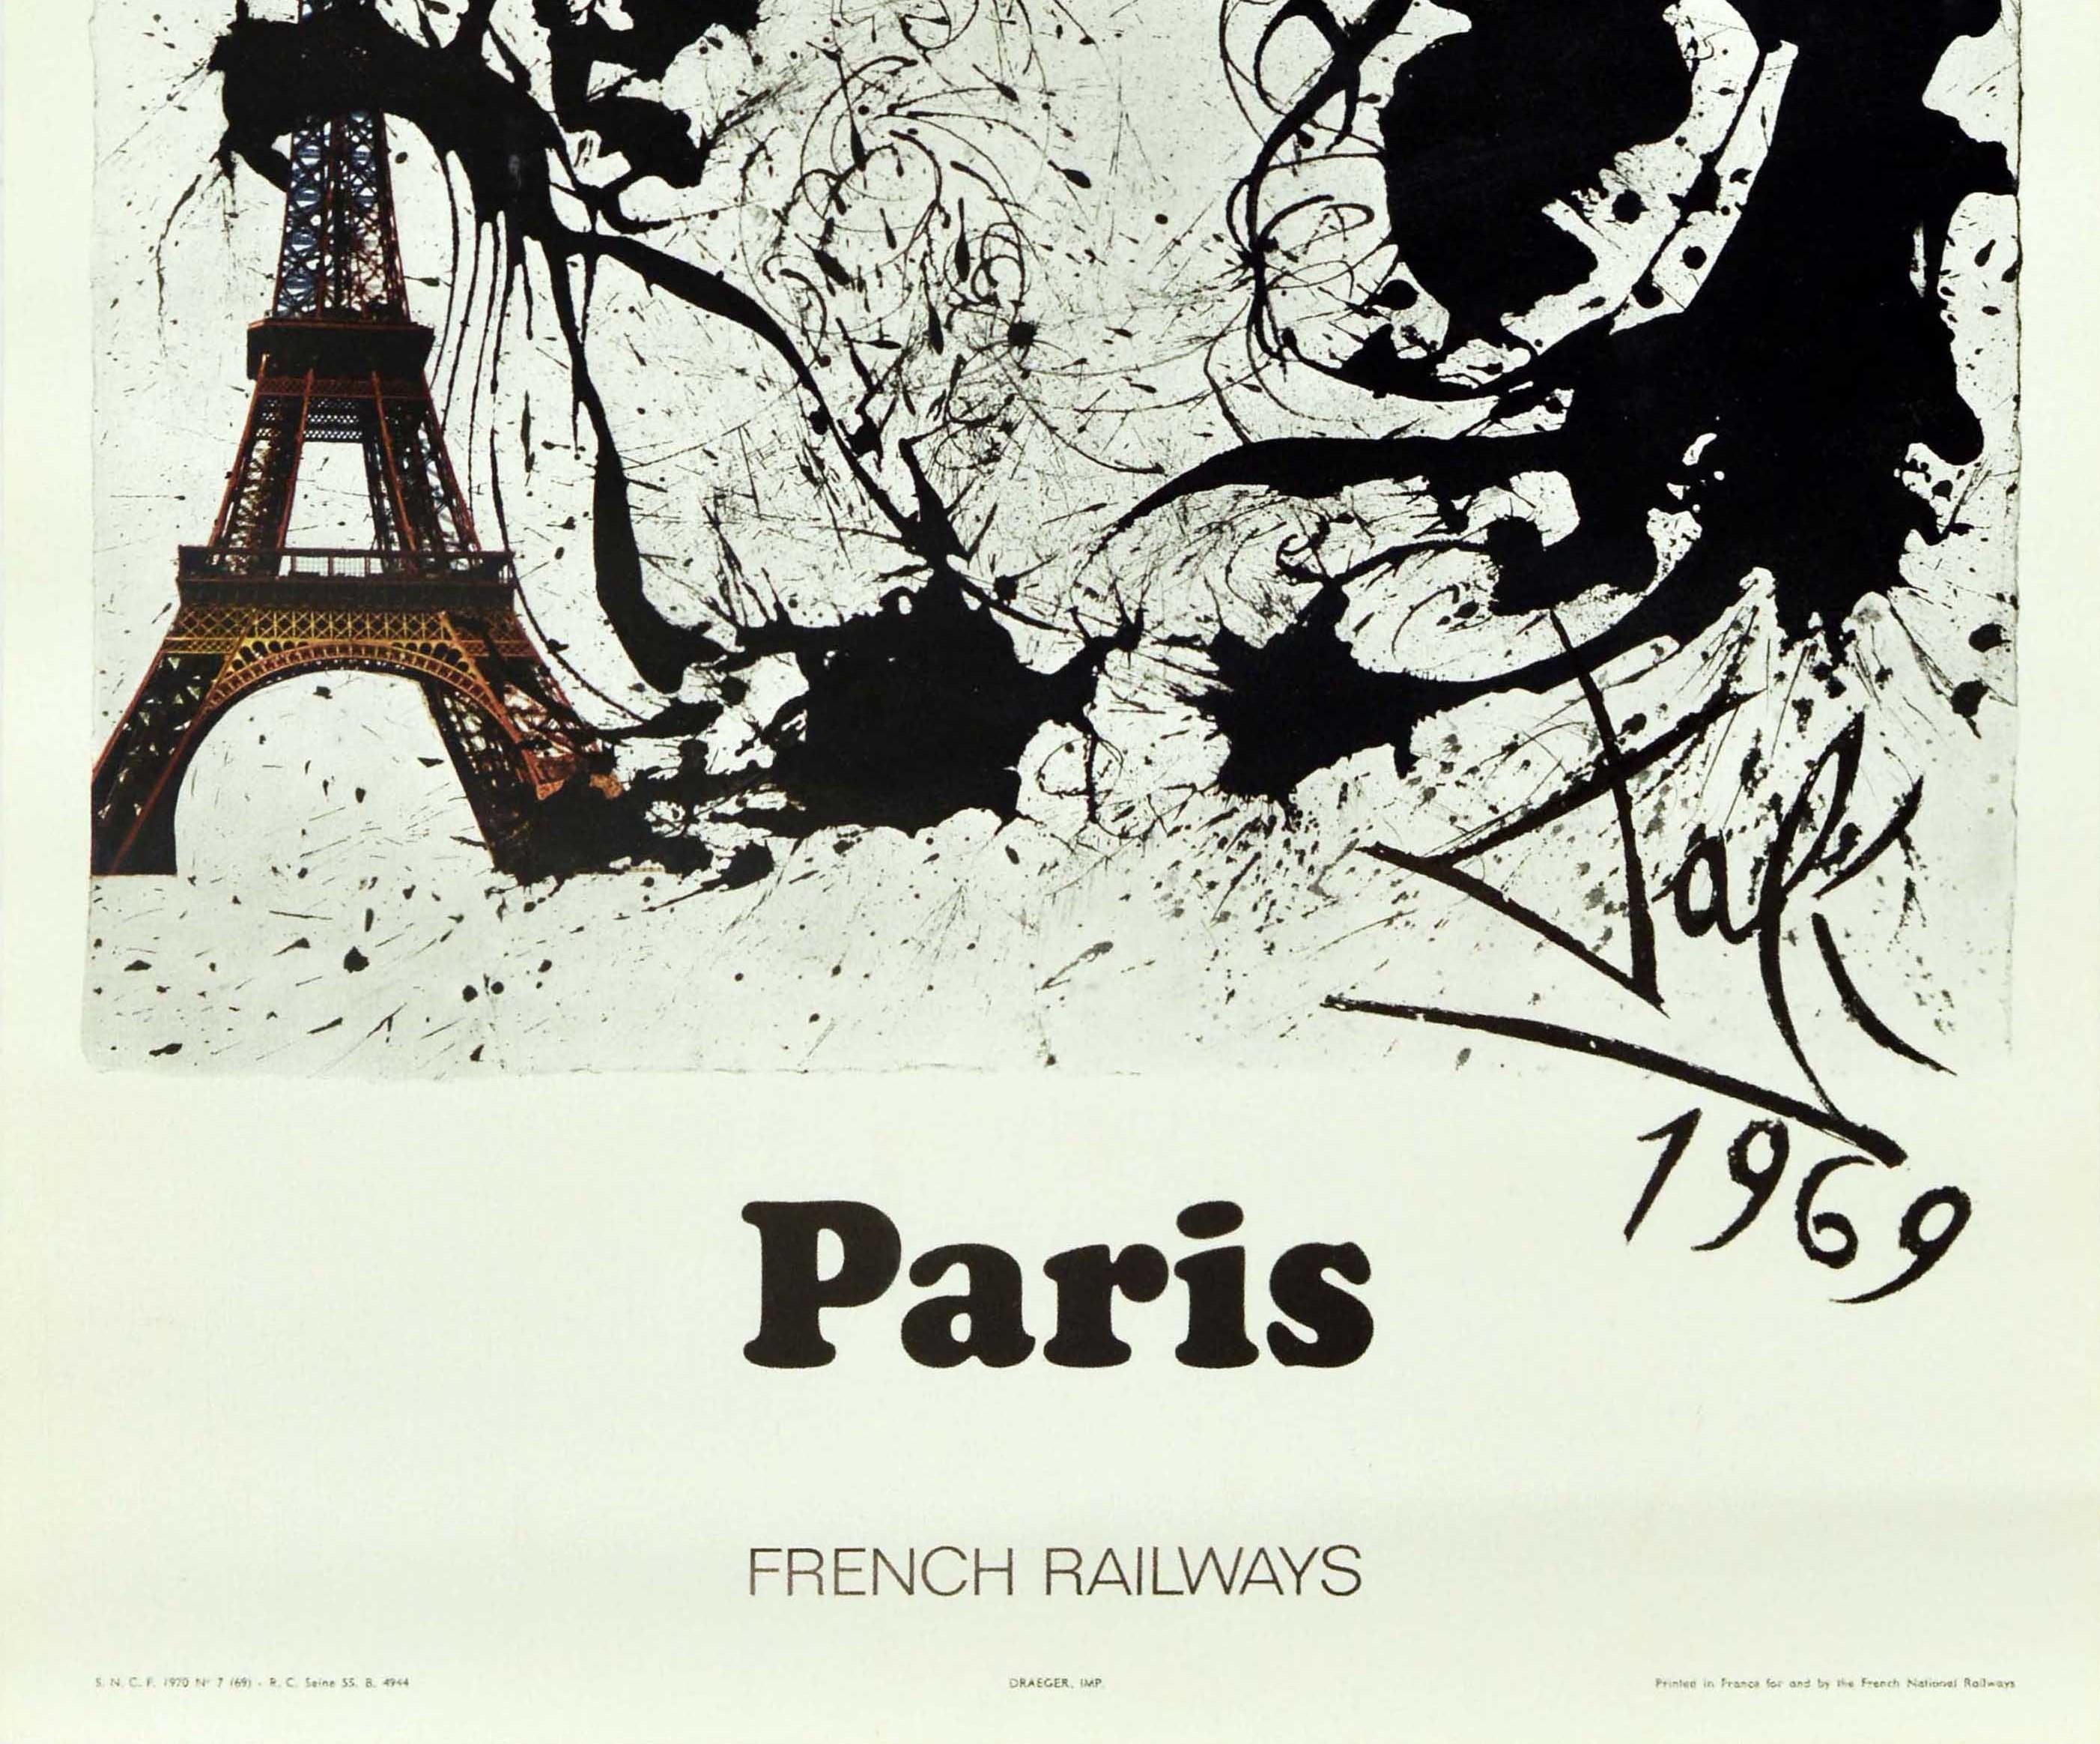 Original Vintage Railway Poster Paris By Dali For SNCF Tour Eiffel Abstract Art  - Surrealist Print by Salvador Dalí